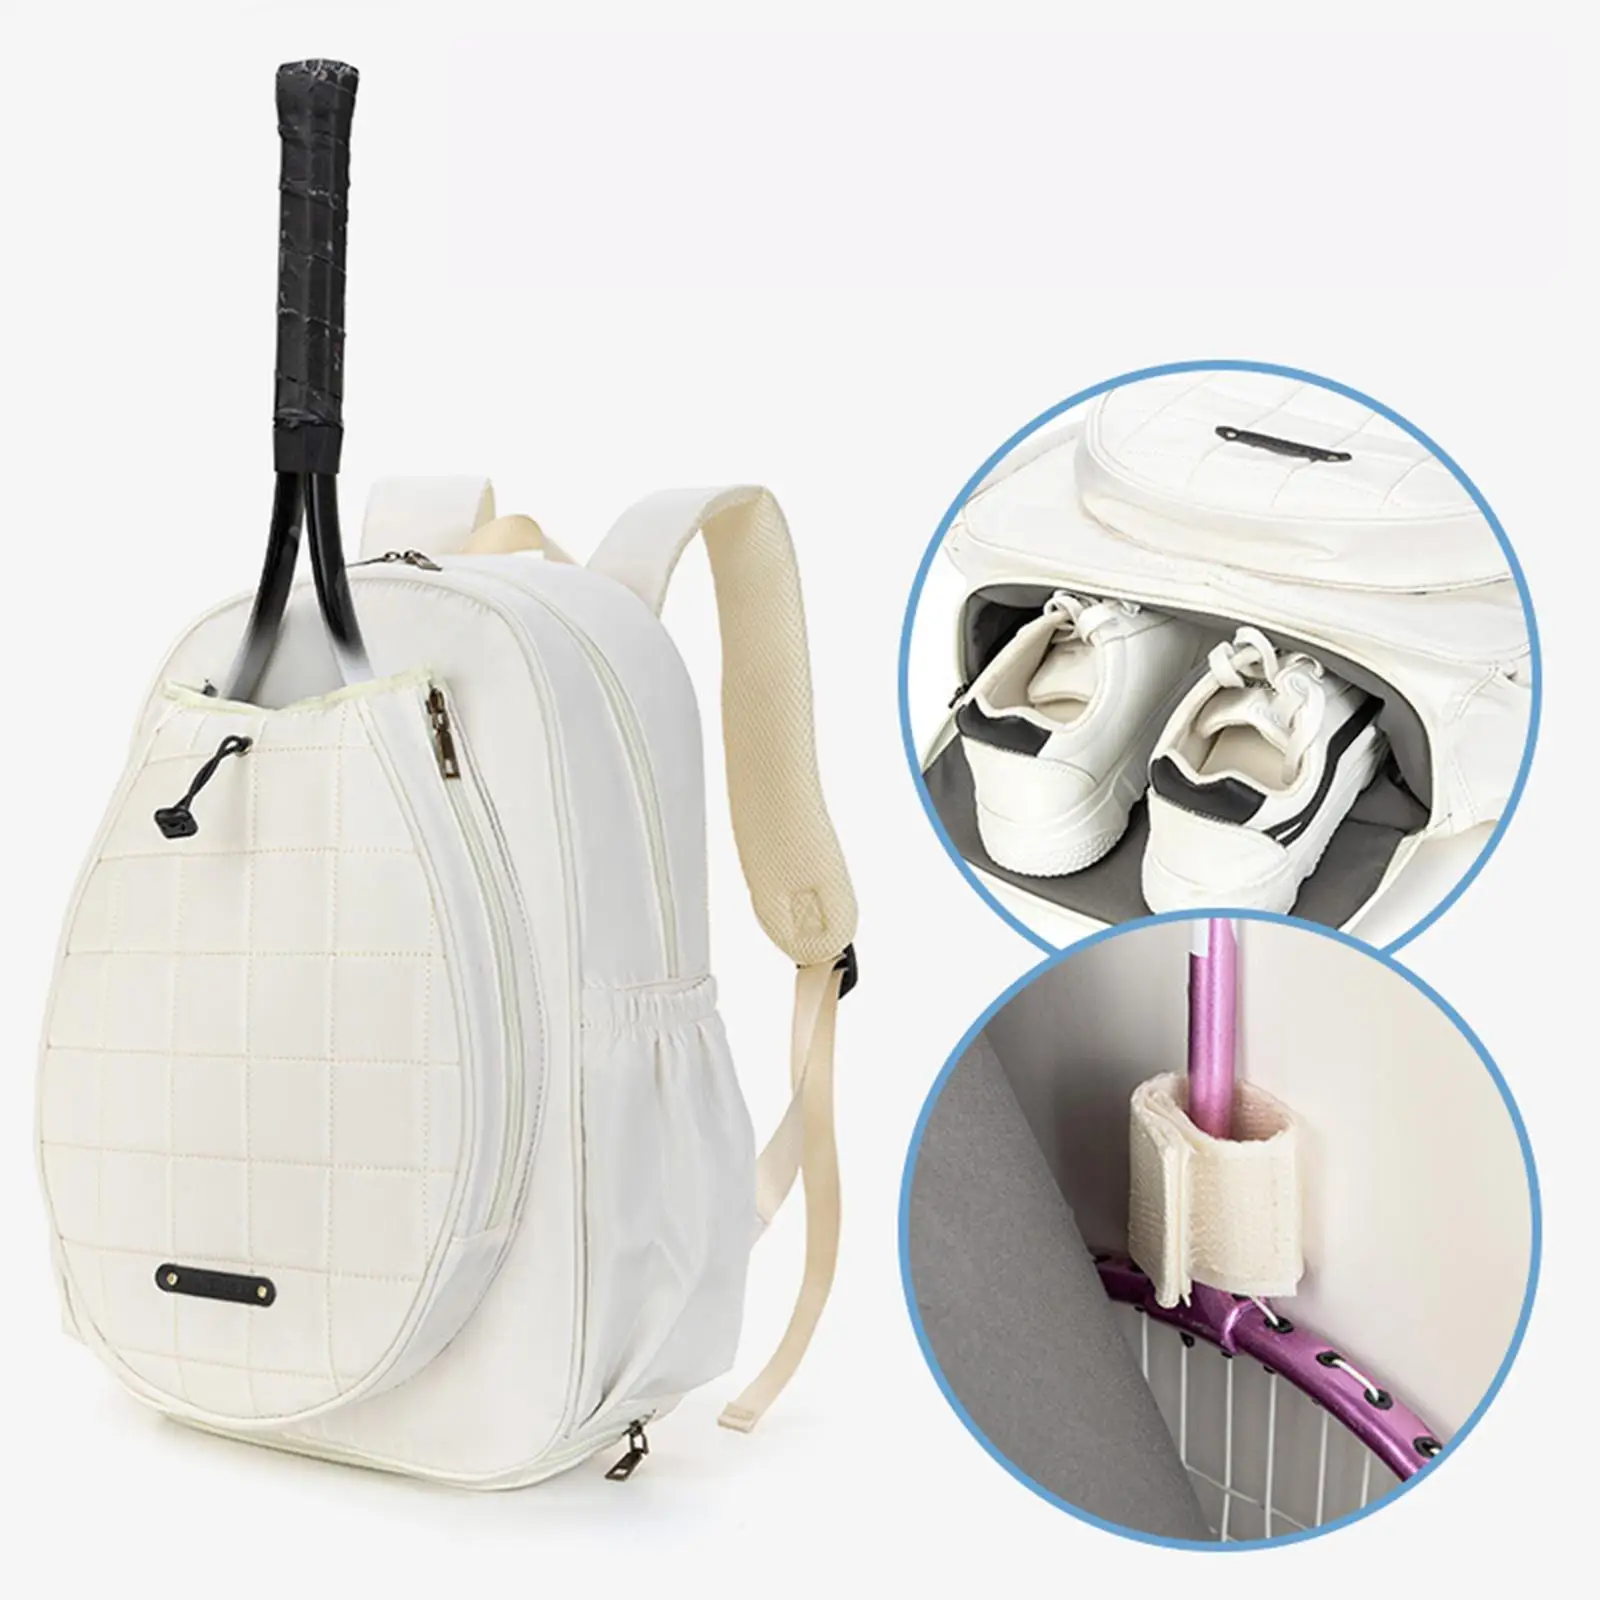 Tennis Backpack Tennis Bag Racket Holder for Pickleball Paddles Badminton Racquet Tennis Racket Squash Racquet Balls Accessories